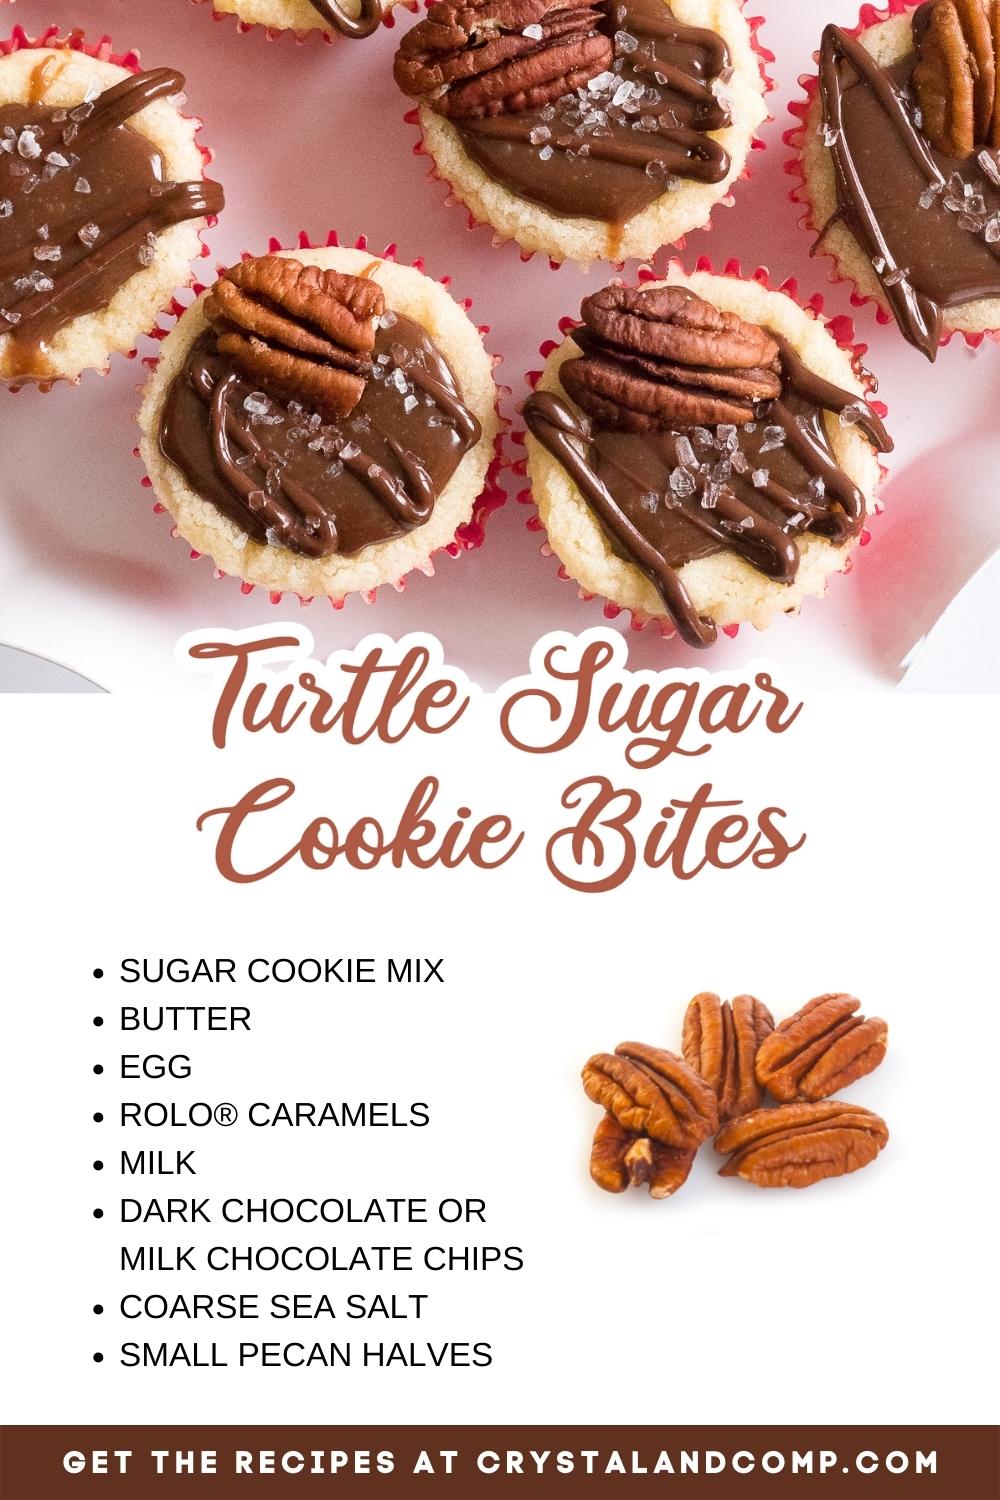 turtle sugar cookie bites ingredient list